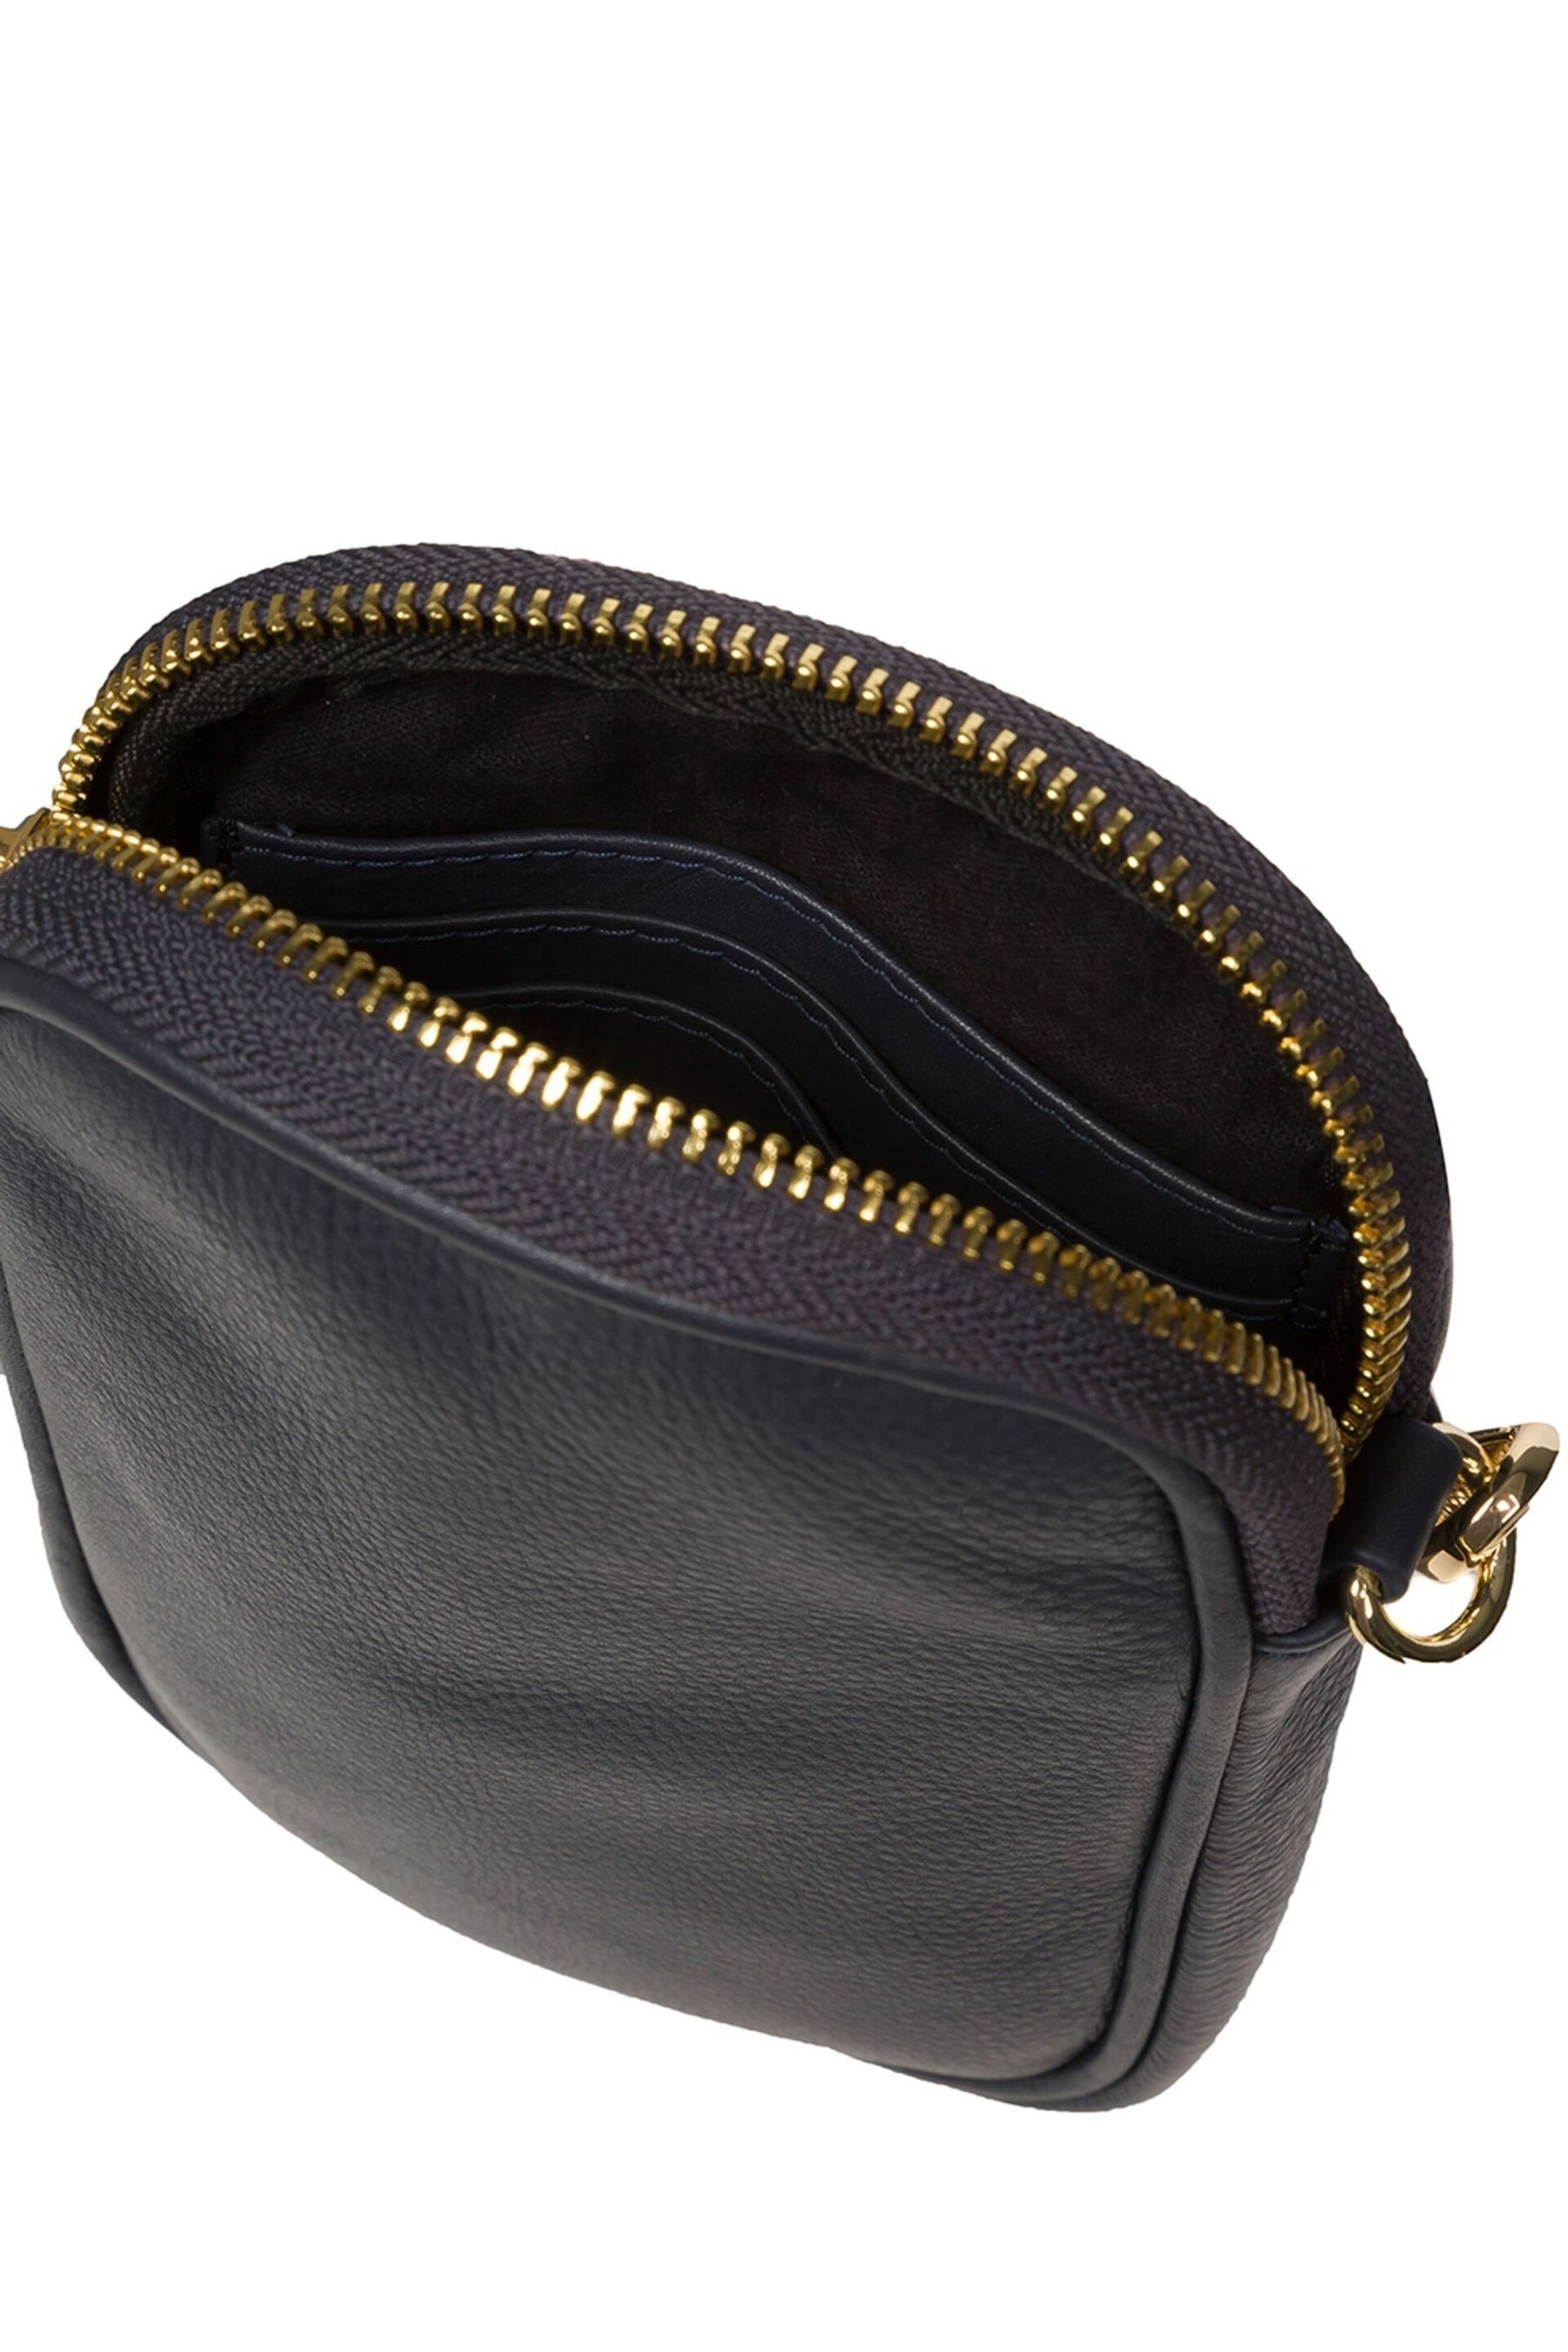 Pure Luxuries London Alaina Nappa Leather Cross-Body Phone Bag - Image 3 of 5